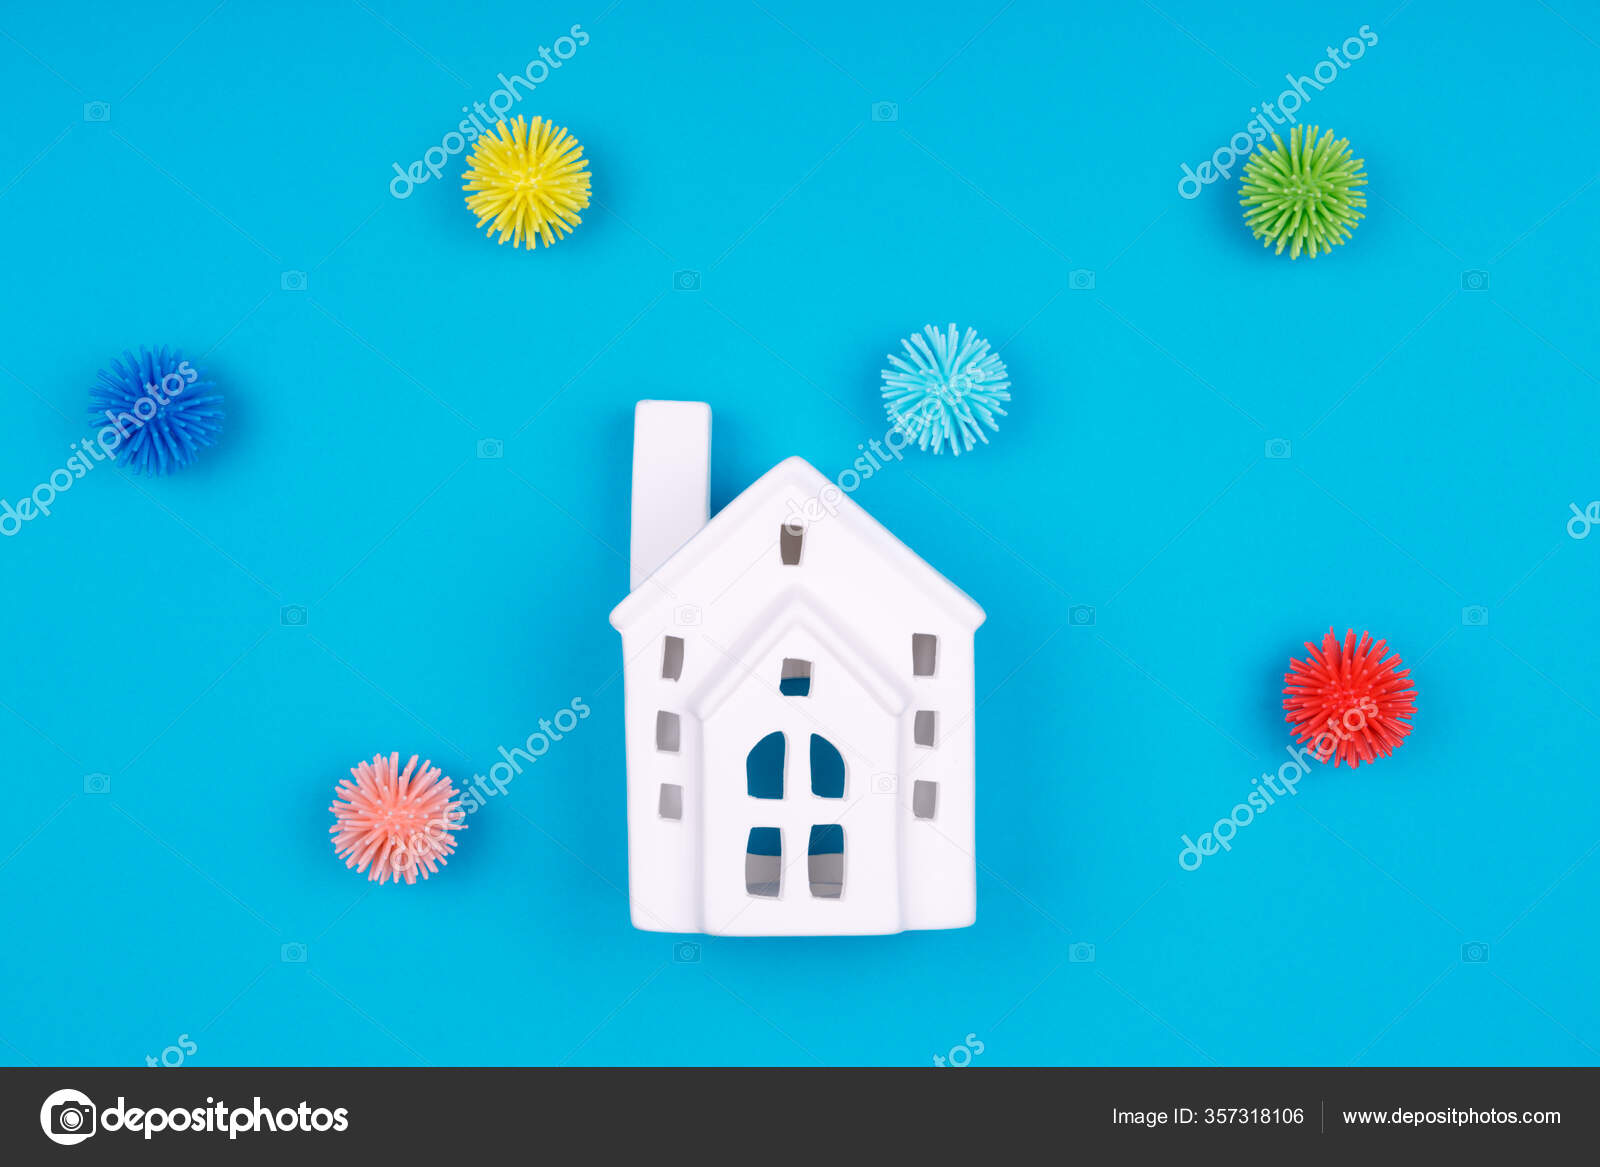 epidemics clipart house